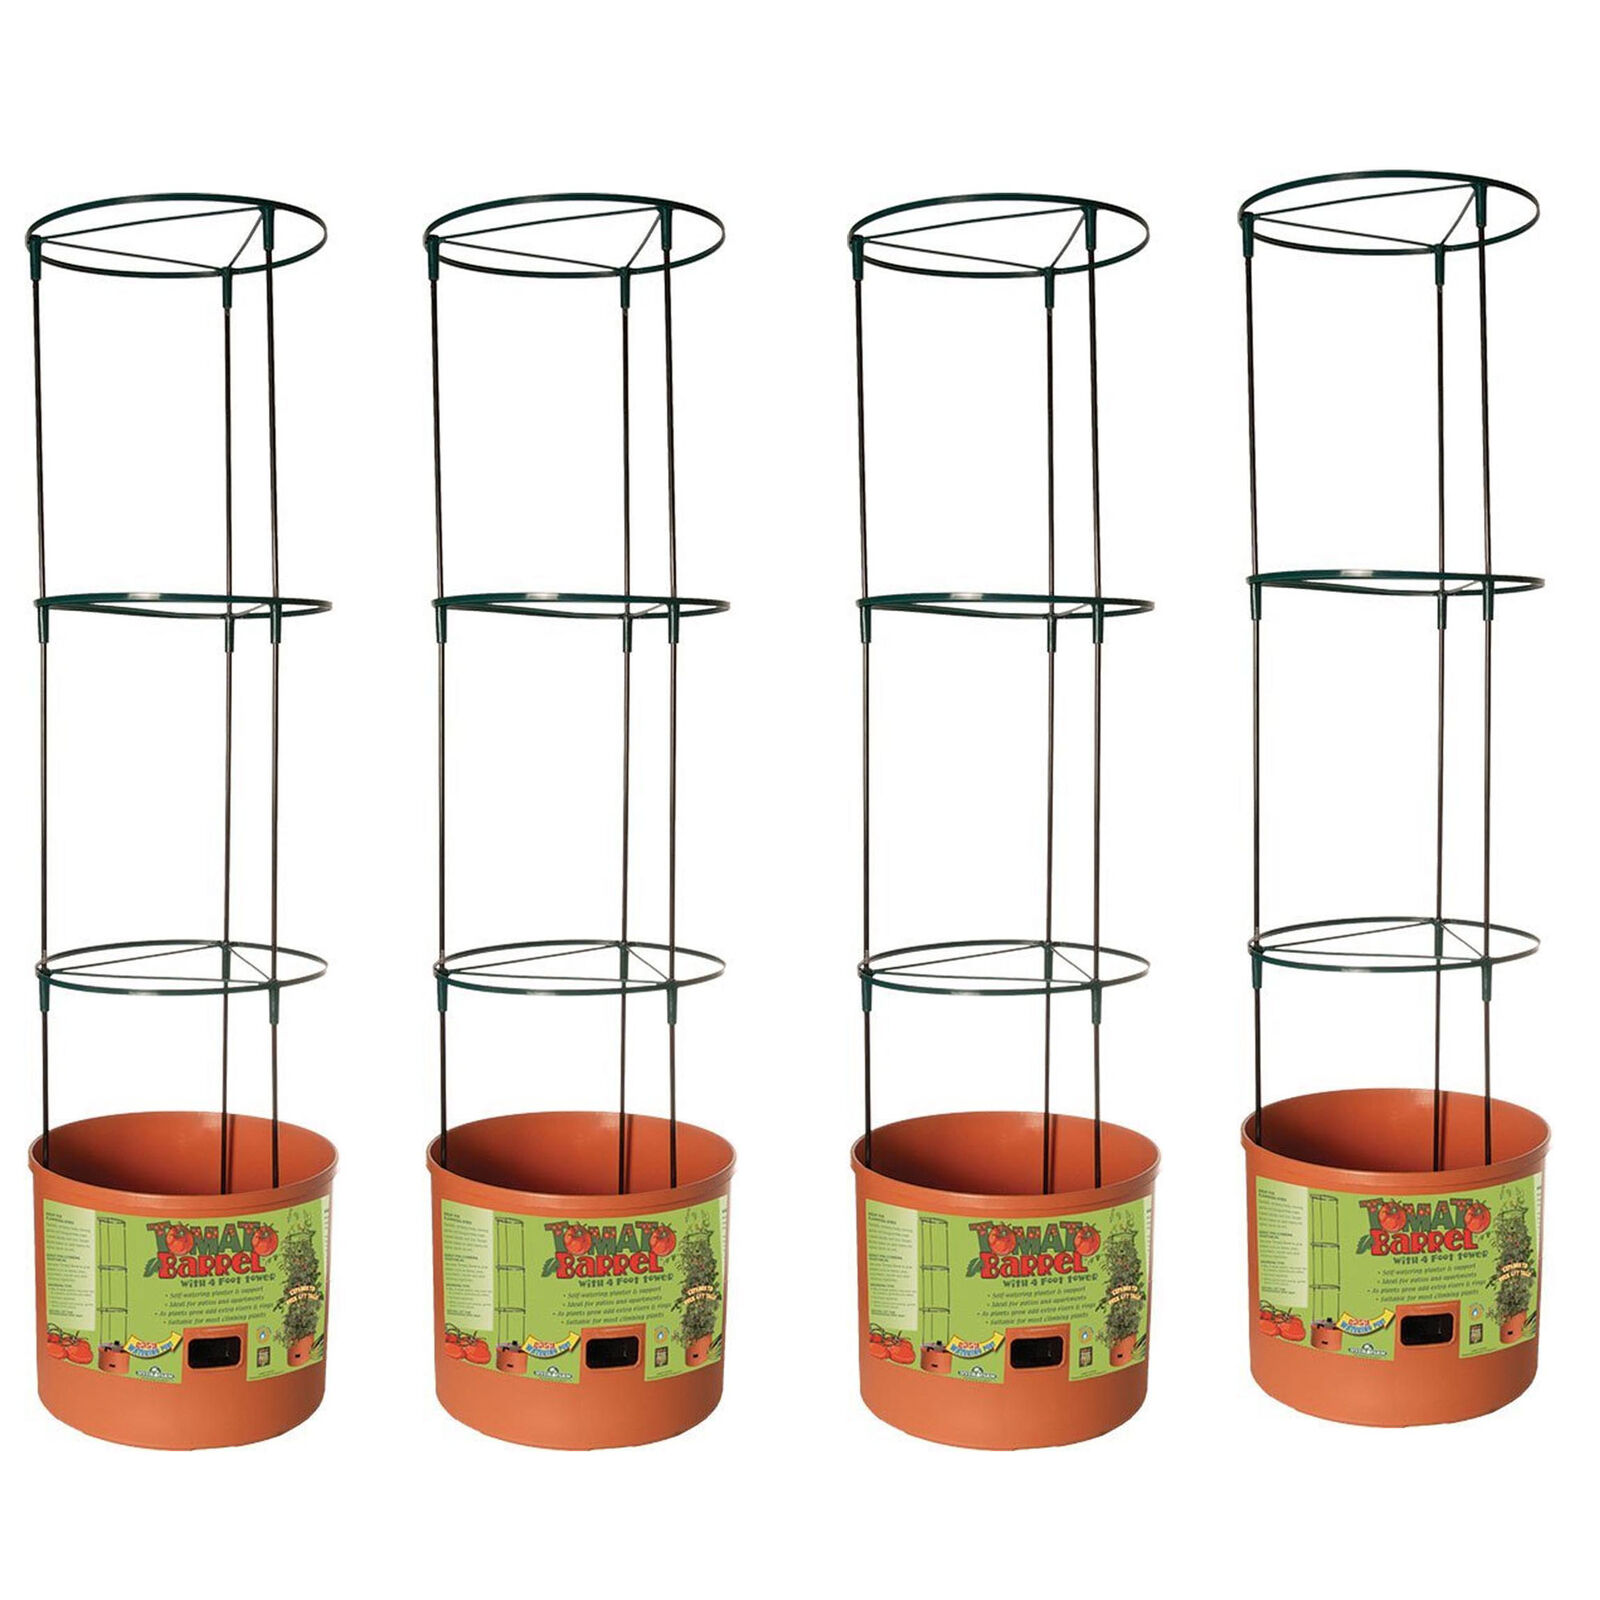 Hydrofarm GCTB Tomato Pot Garden Planting System with 4 Foot Trellis (4 Pack)